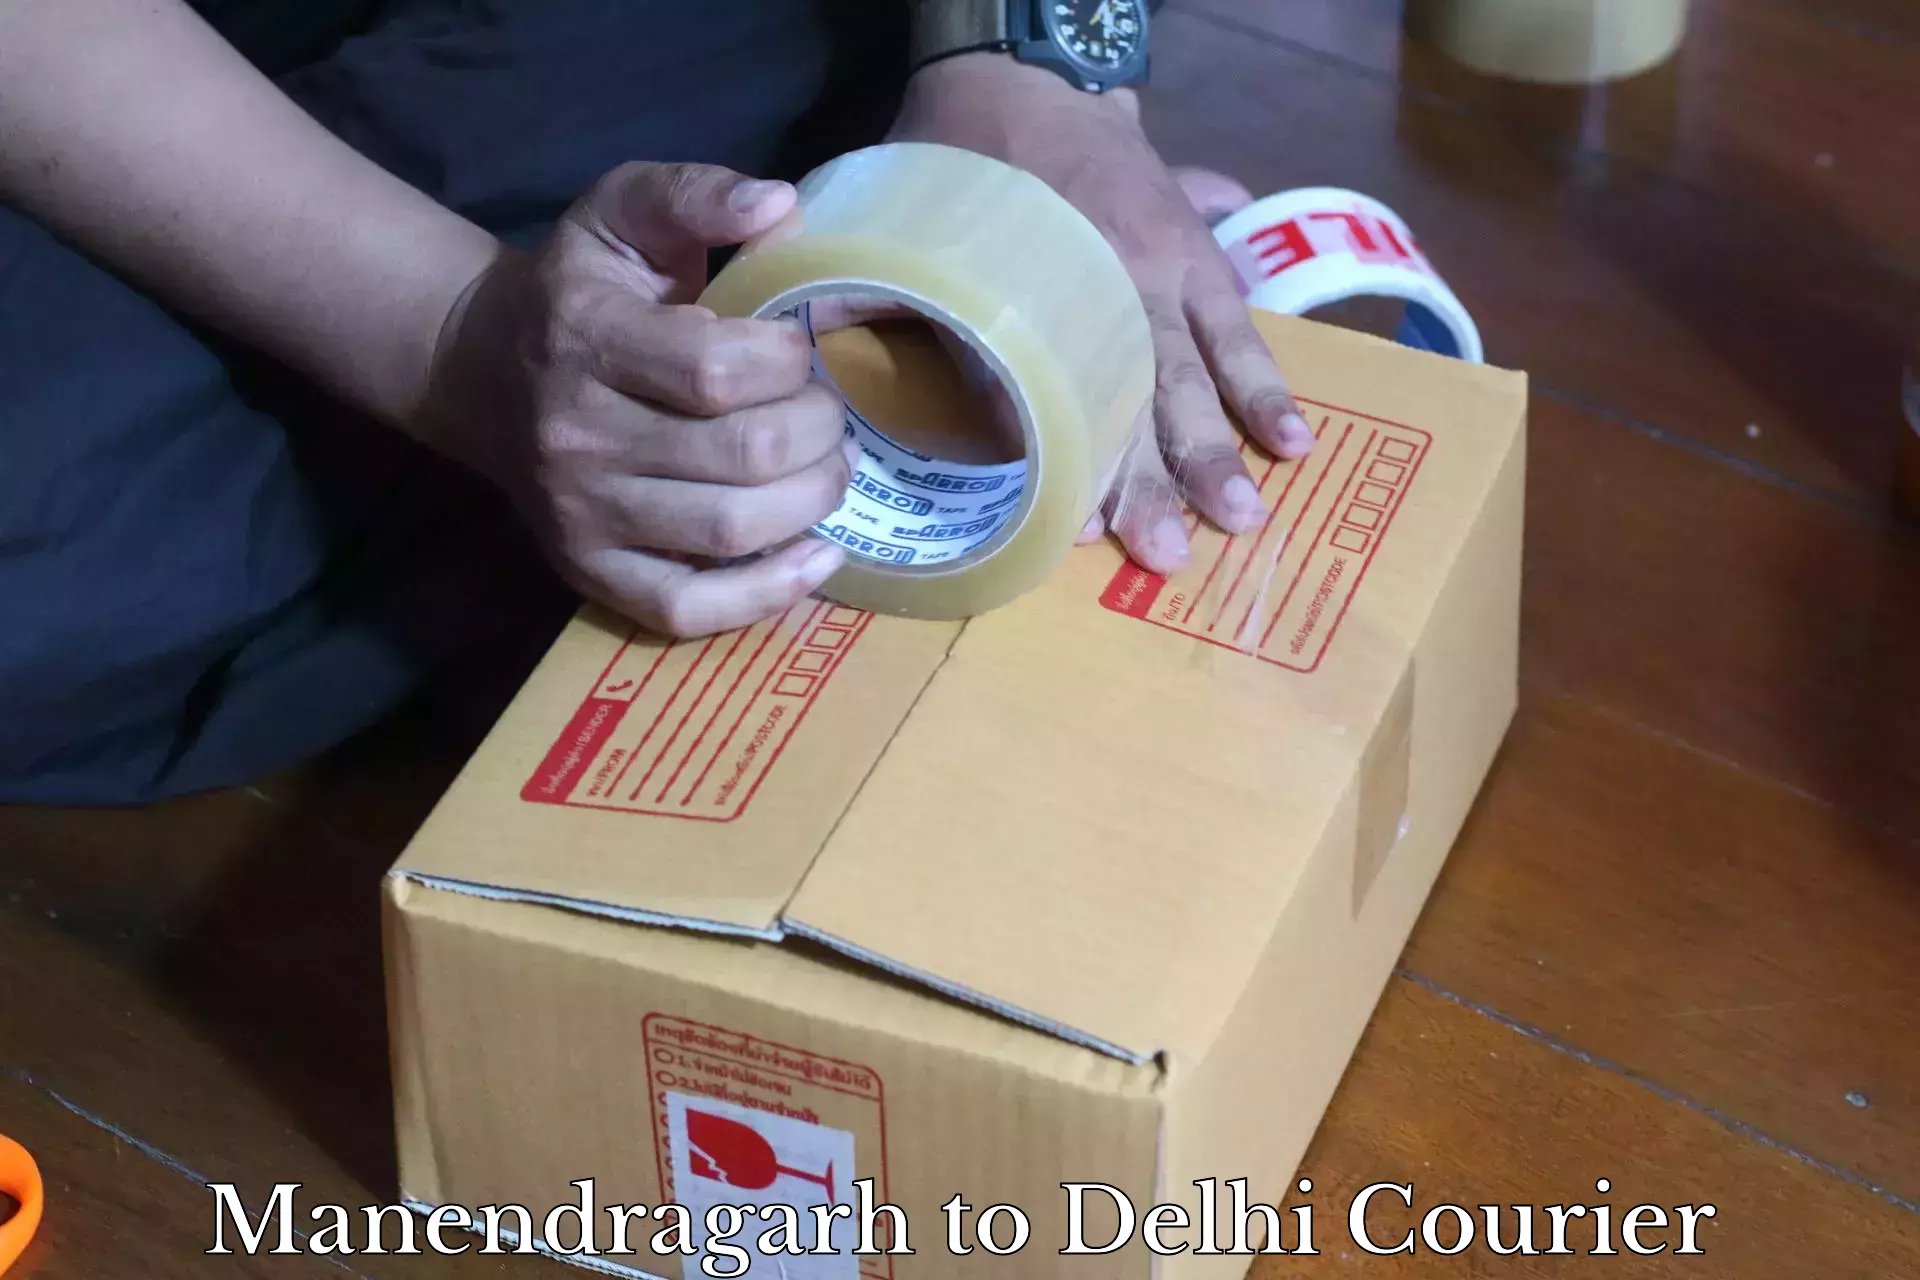 24/7 courier service Manendragarh to East Delhi